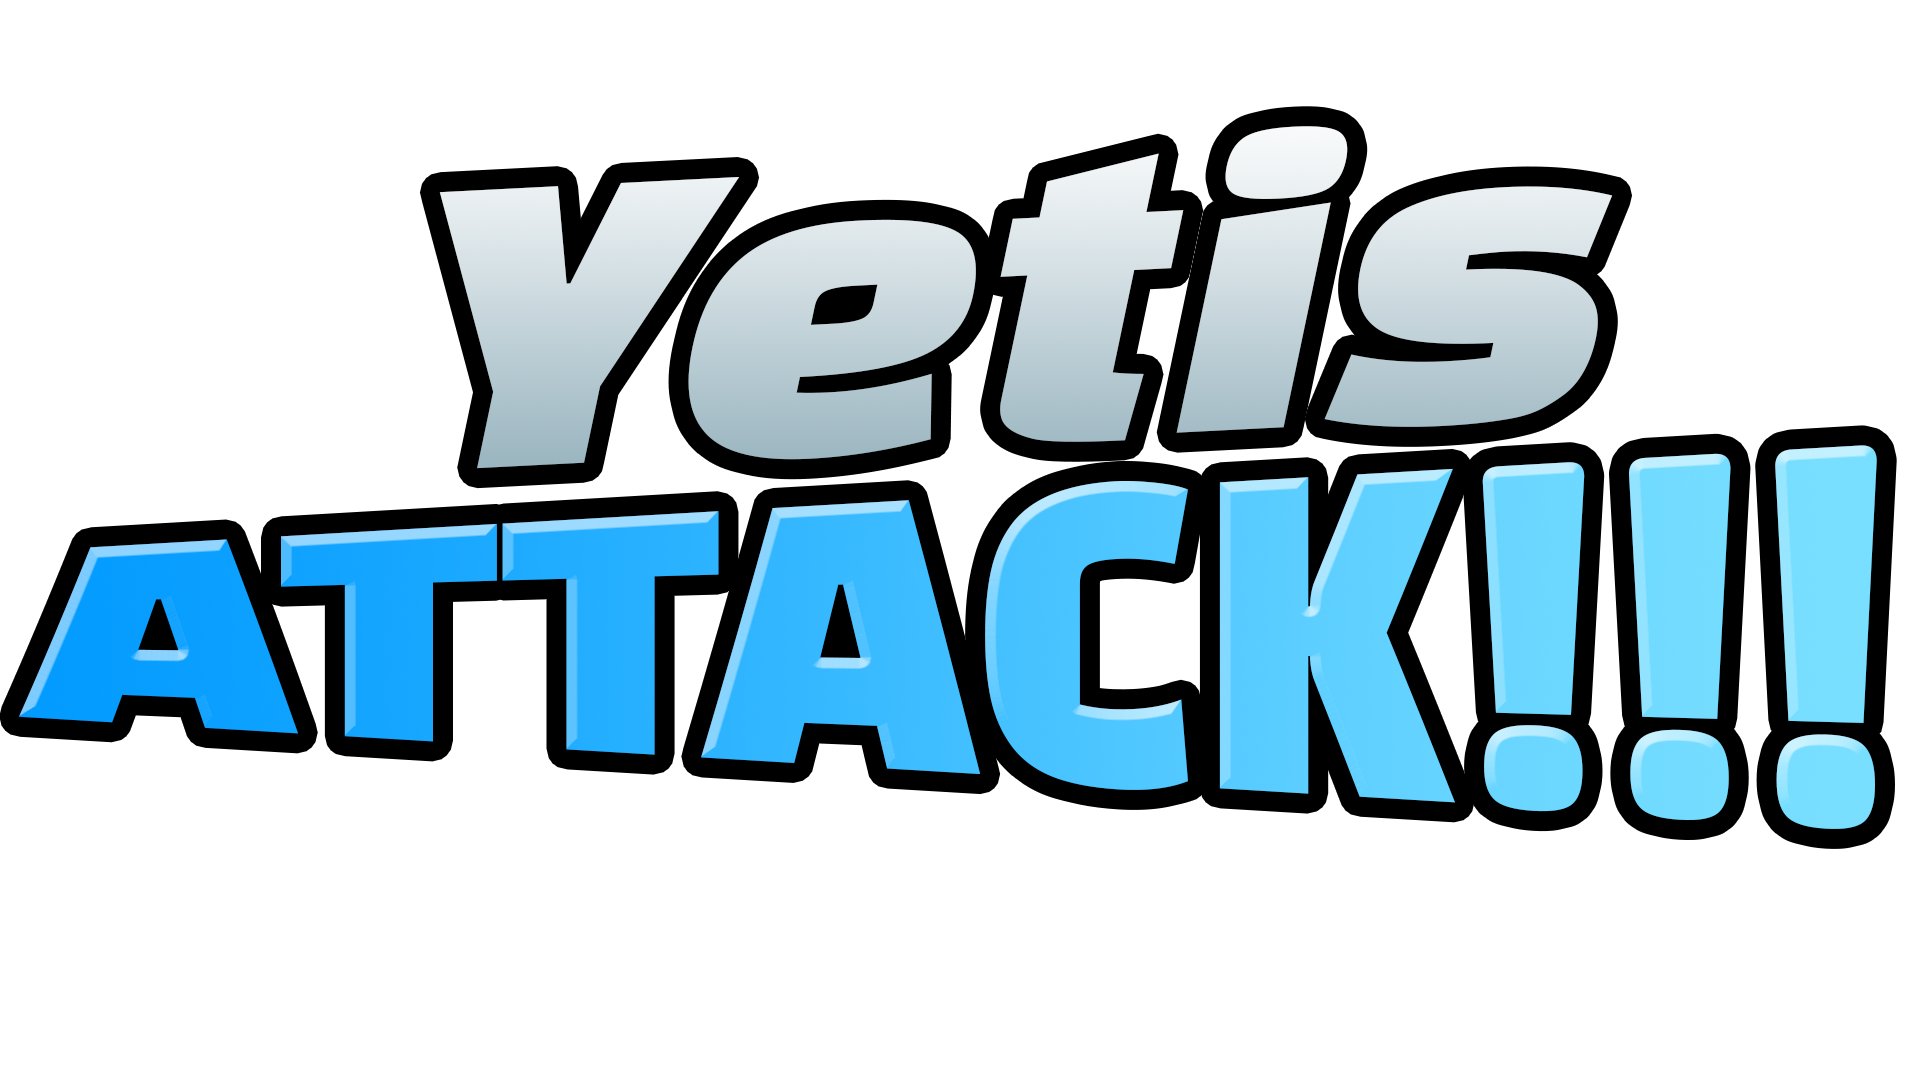 Yetis Attack!!!